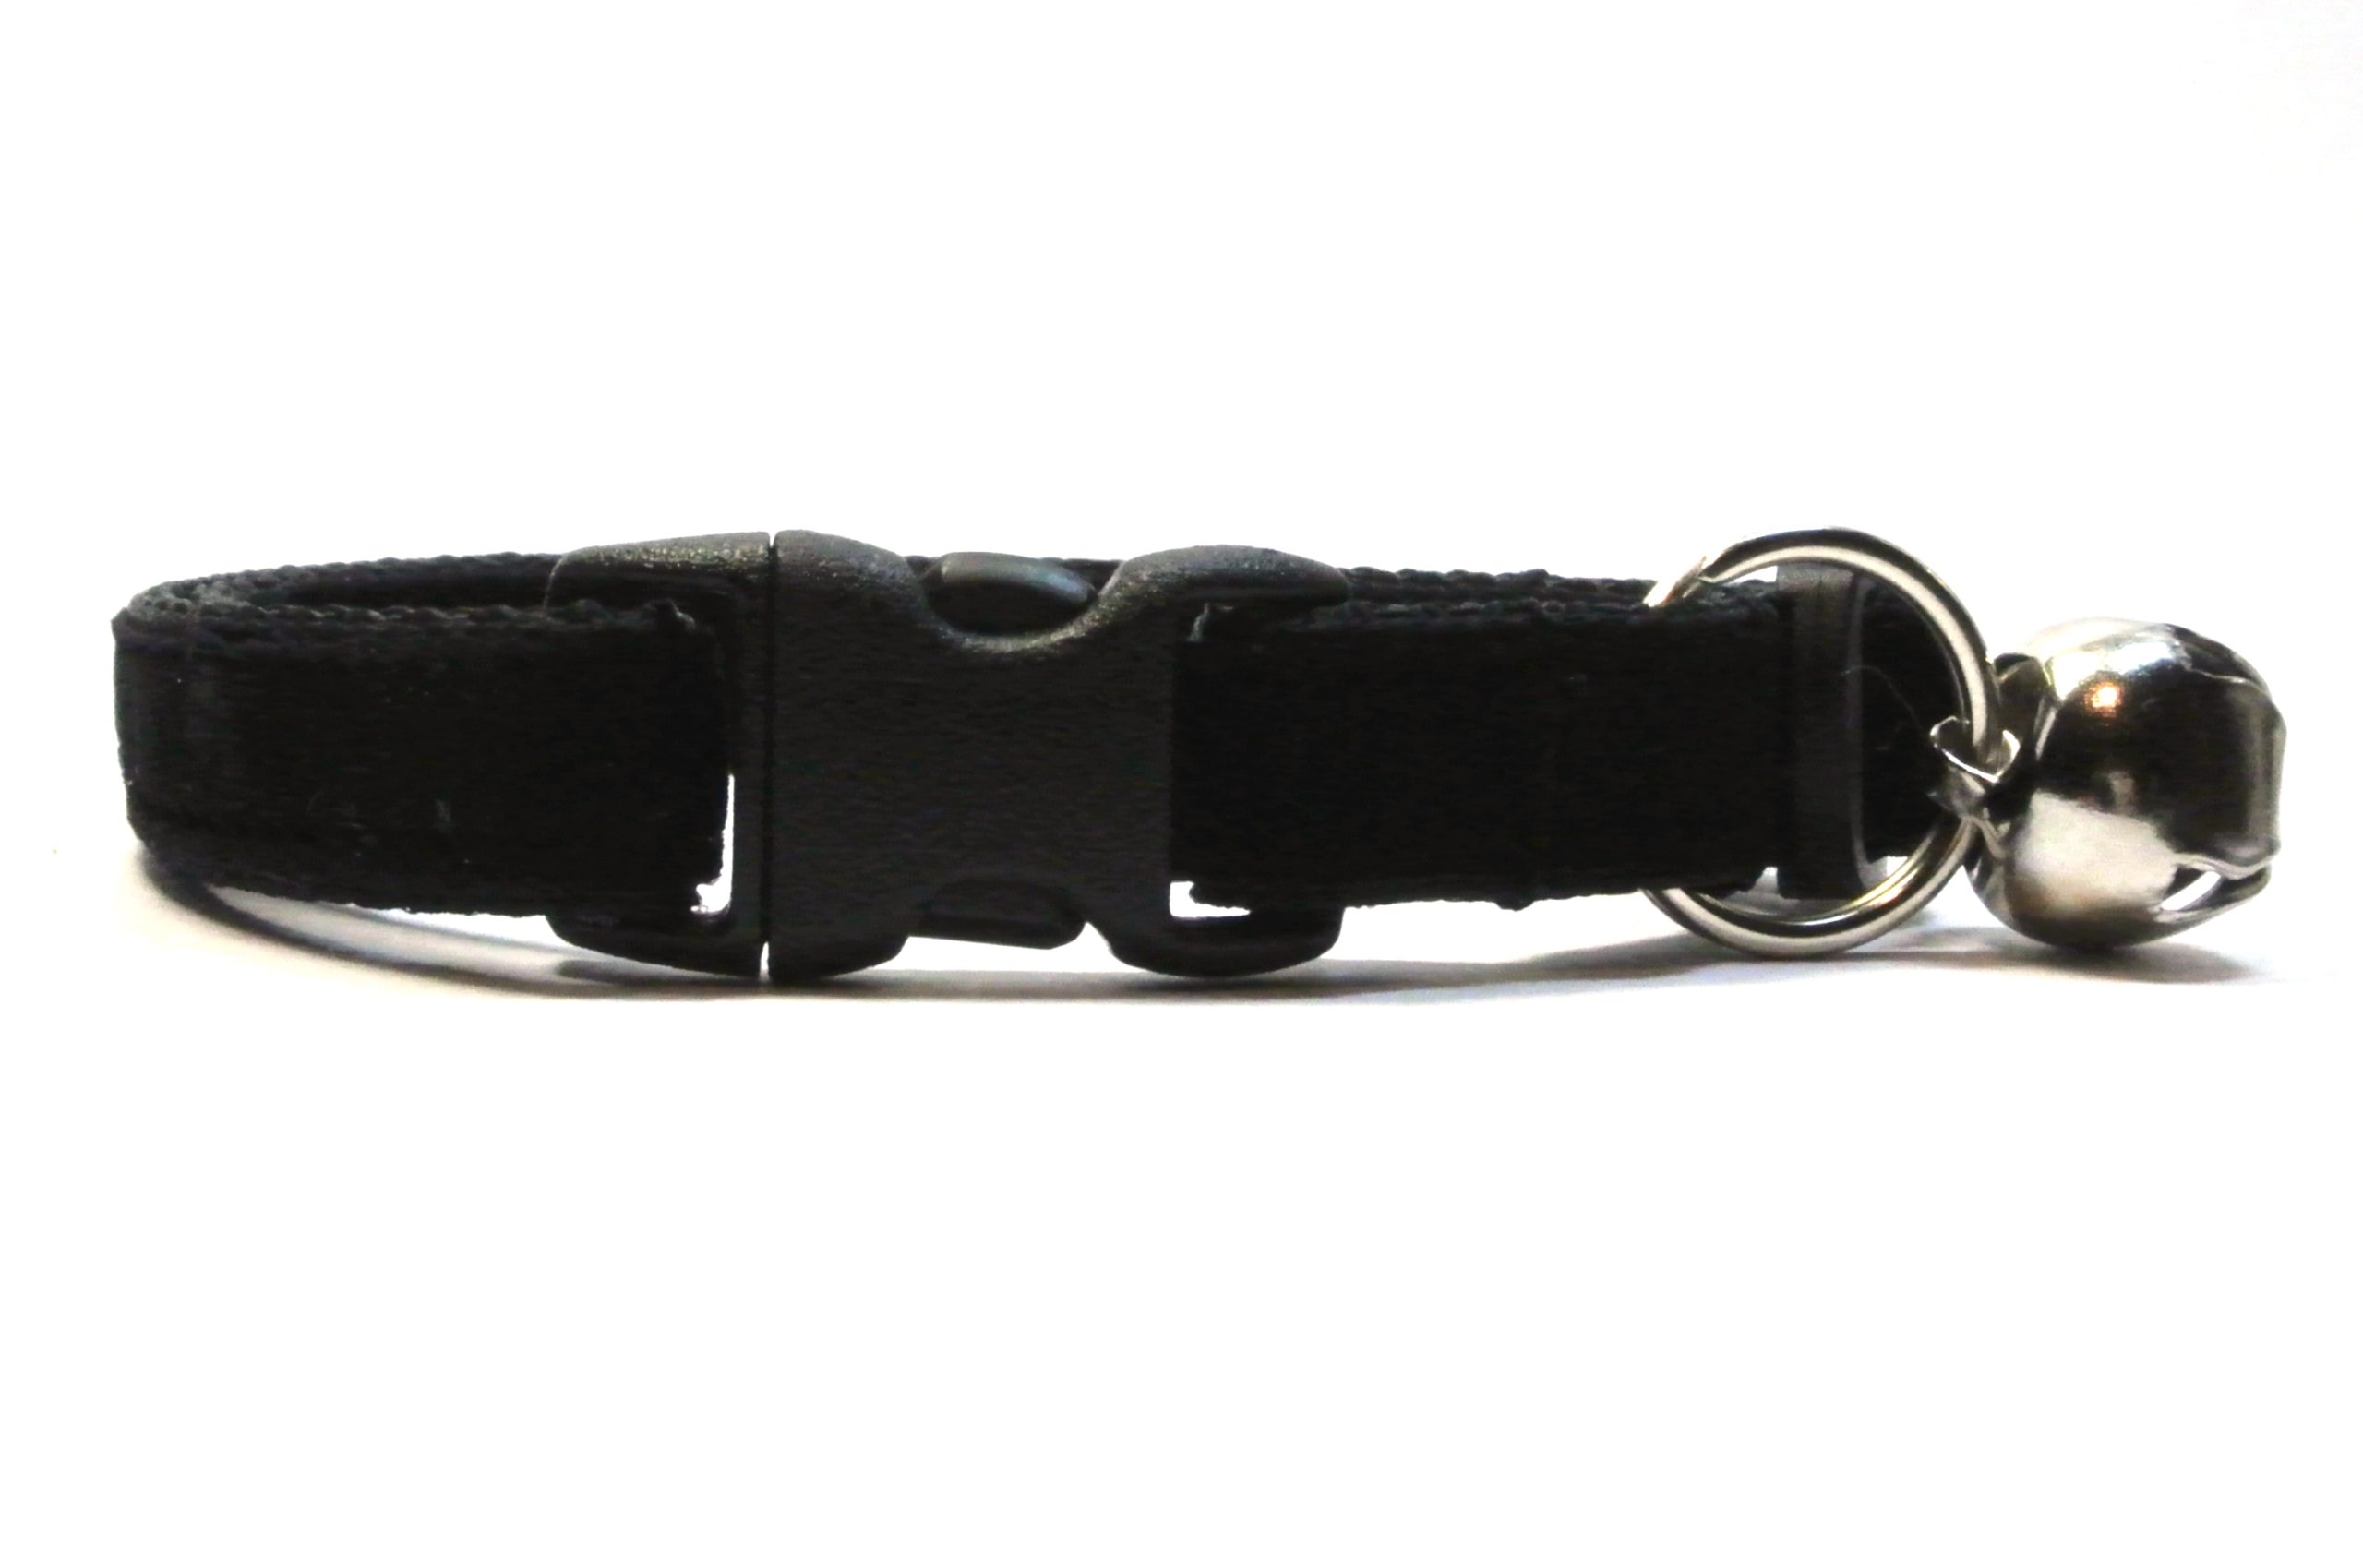 SR VISION Adjustable Length Cat Collar with Bell (Black)